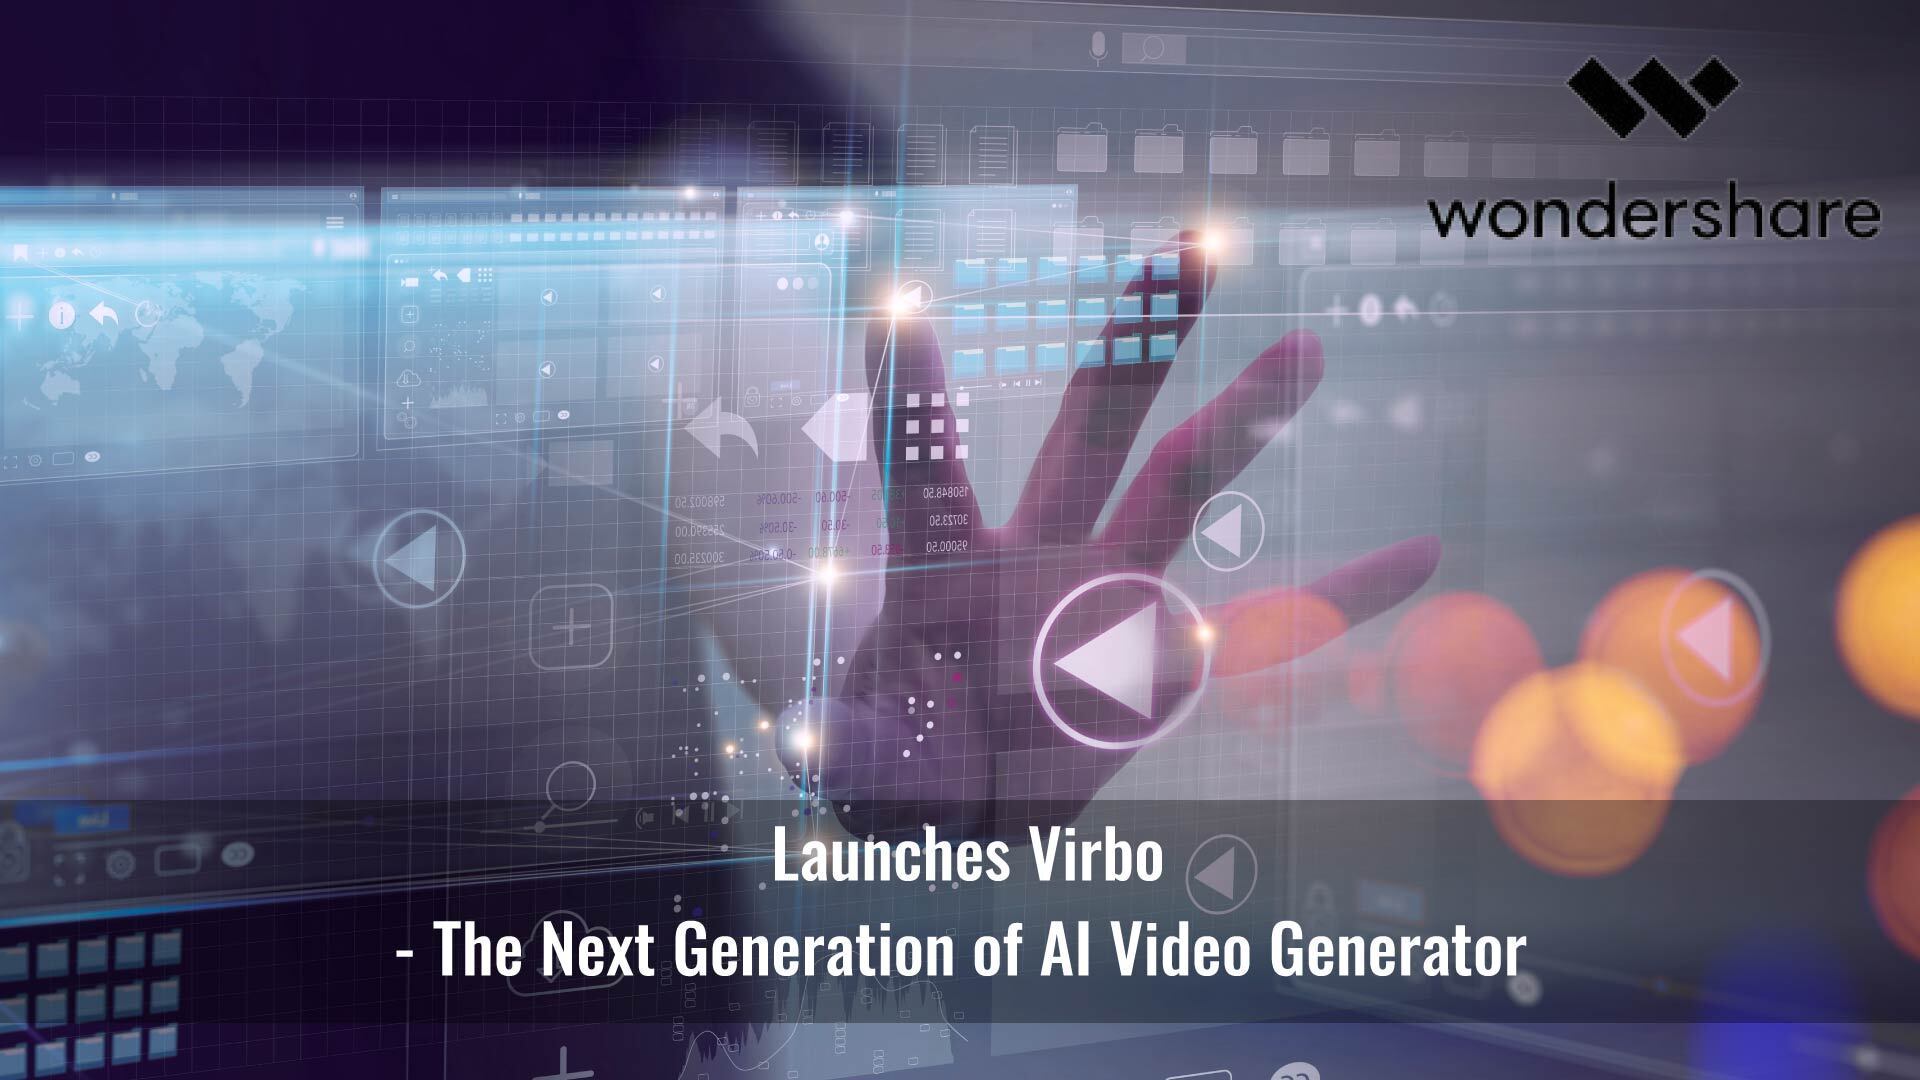 Wondershare Launches Virbo - The Next Generation of AI Video Generator